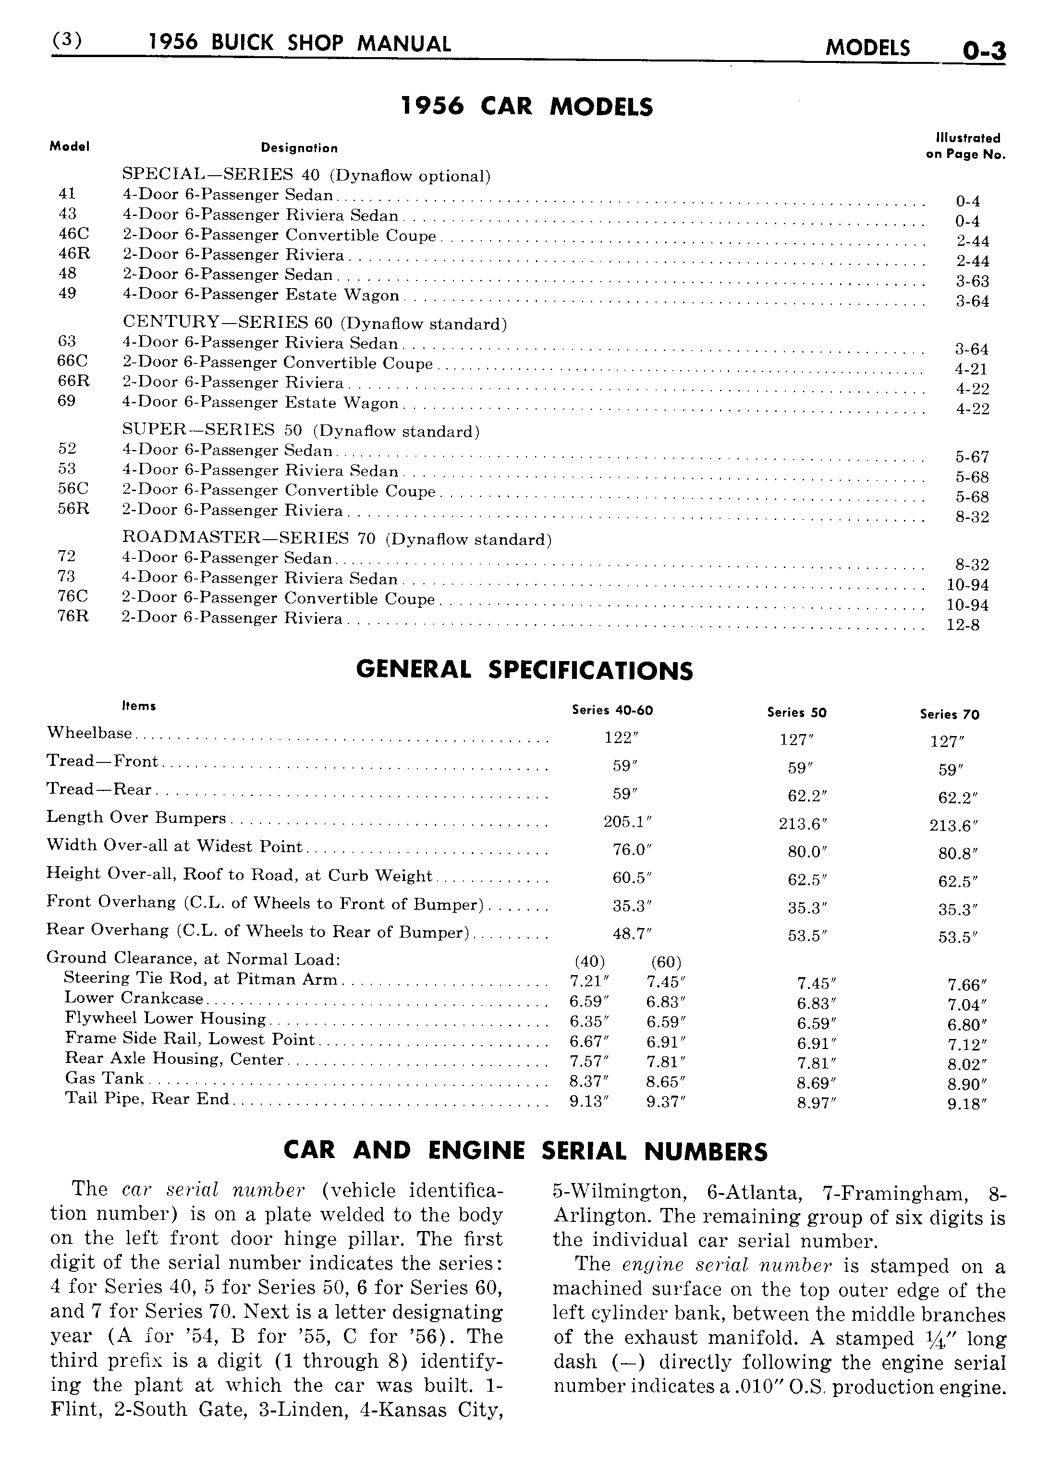 n_01 1956 Buick Shop Manual - Gen Information-005-005.jpg